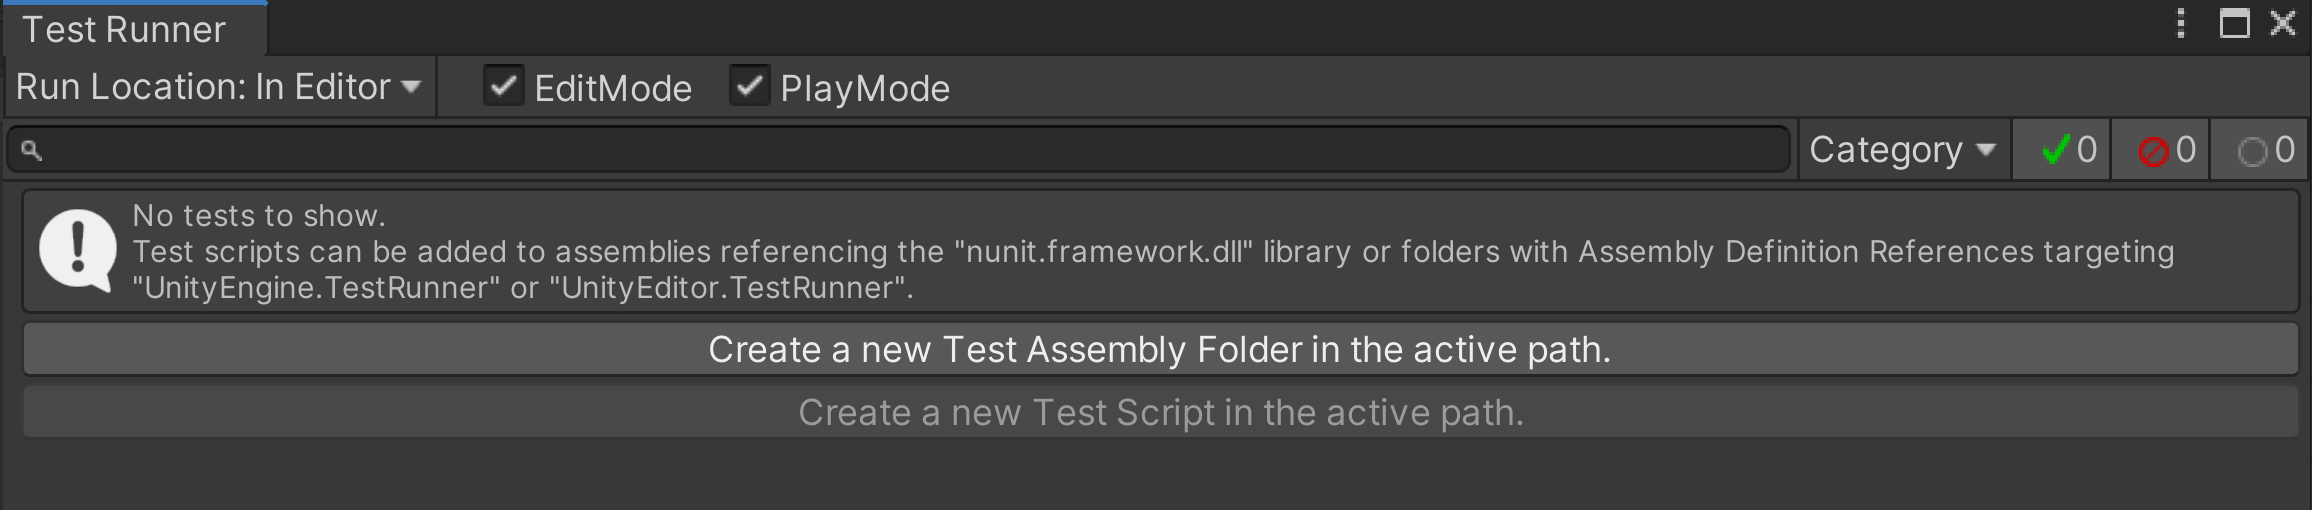 Test Runner window EditMode tab